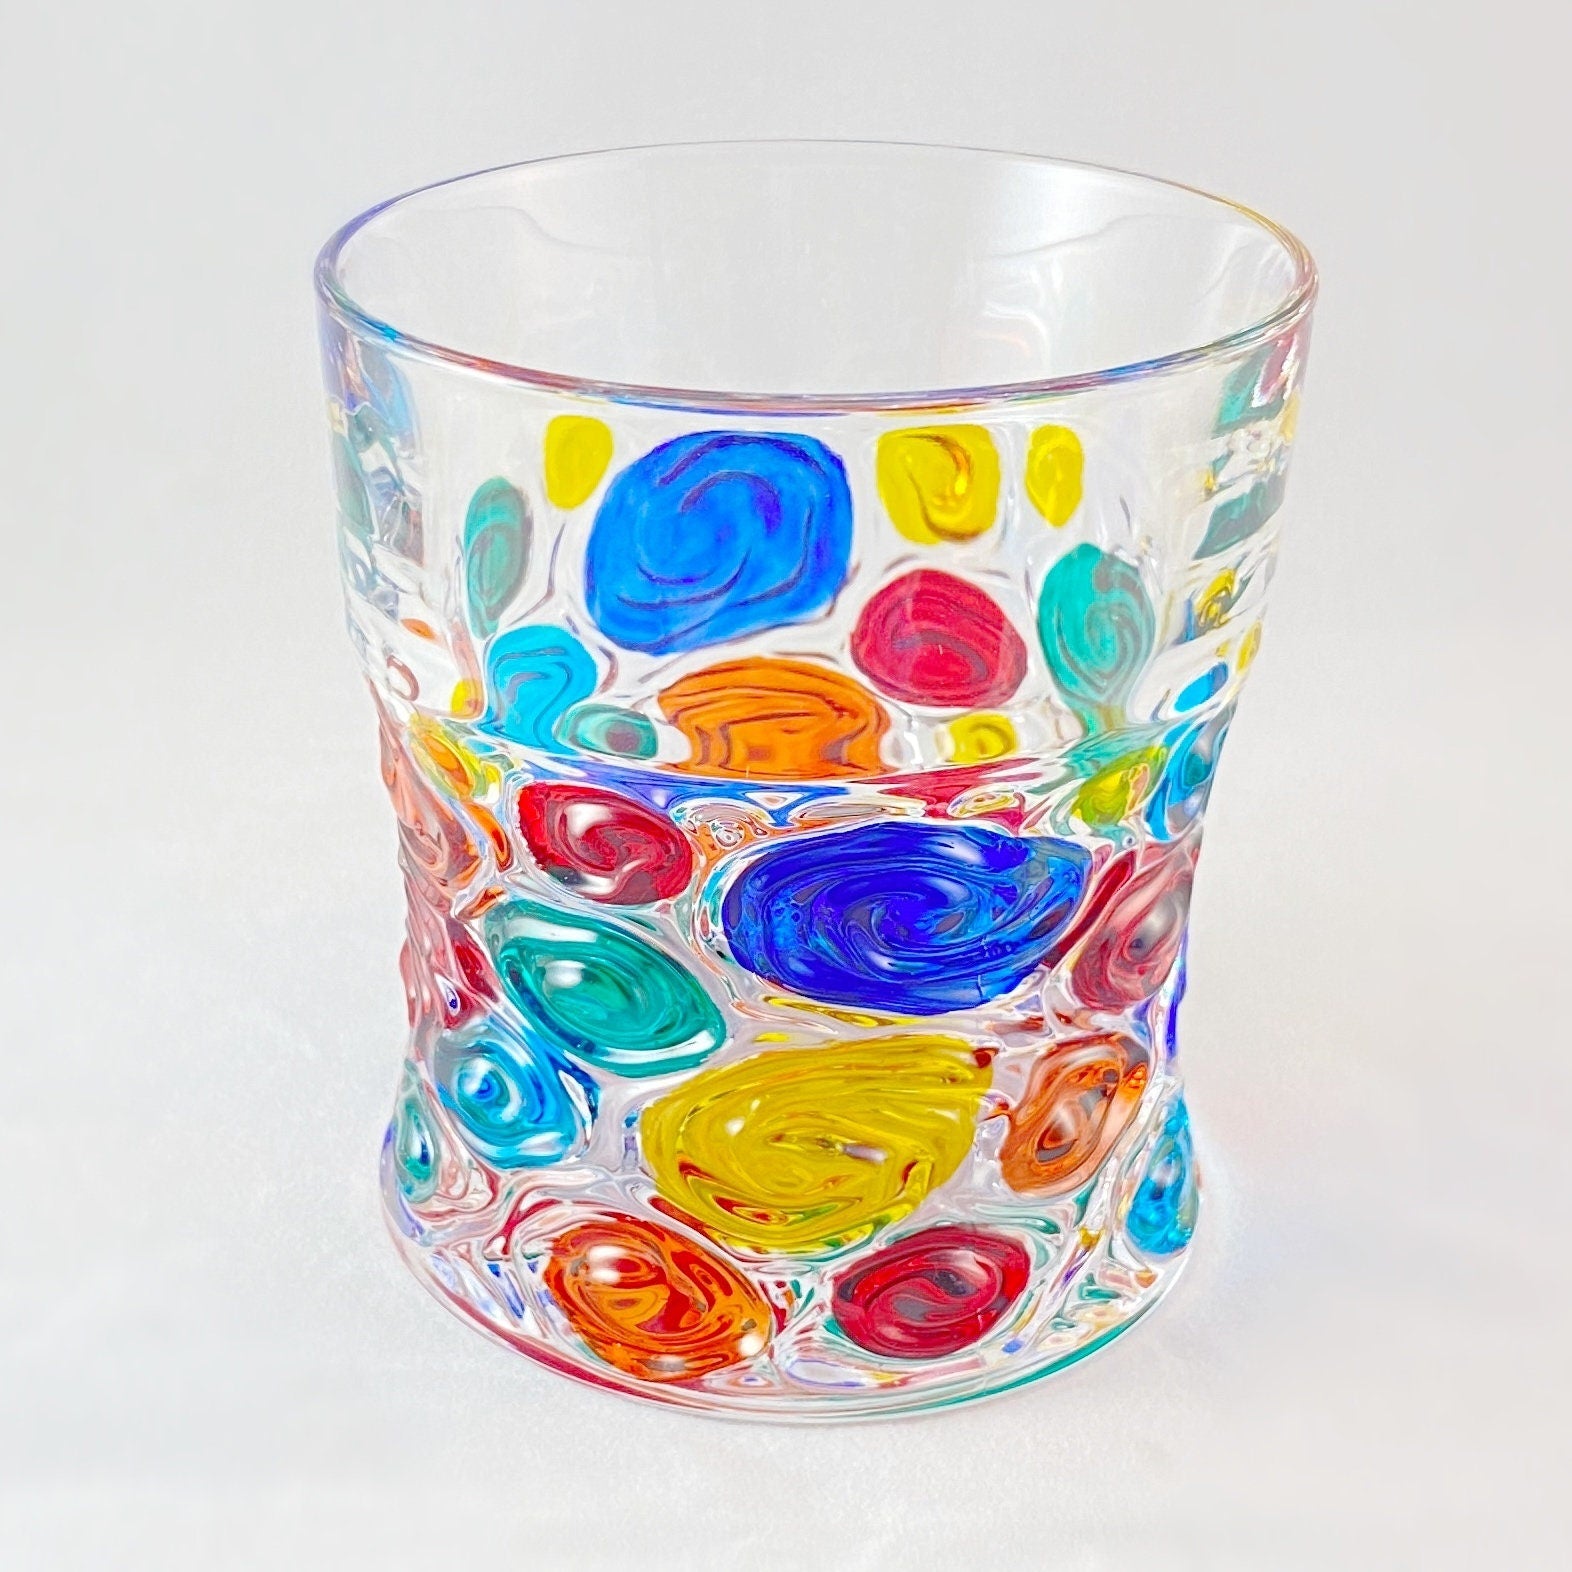 Venetian Glass Sound Whiskey Tumbler - Handmade in Italy, Colorful Murano Glass